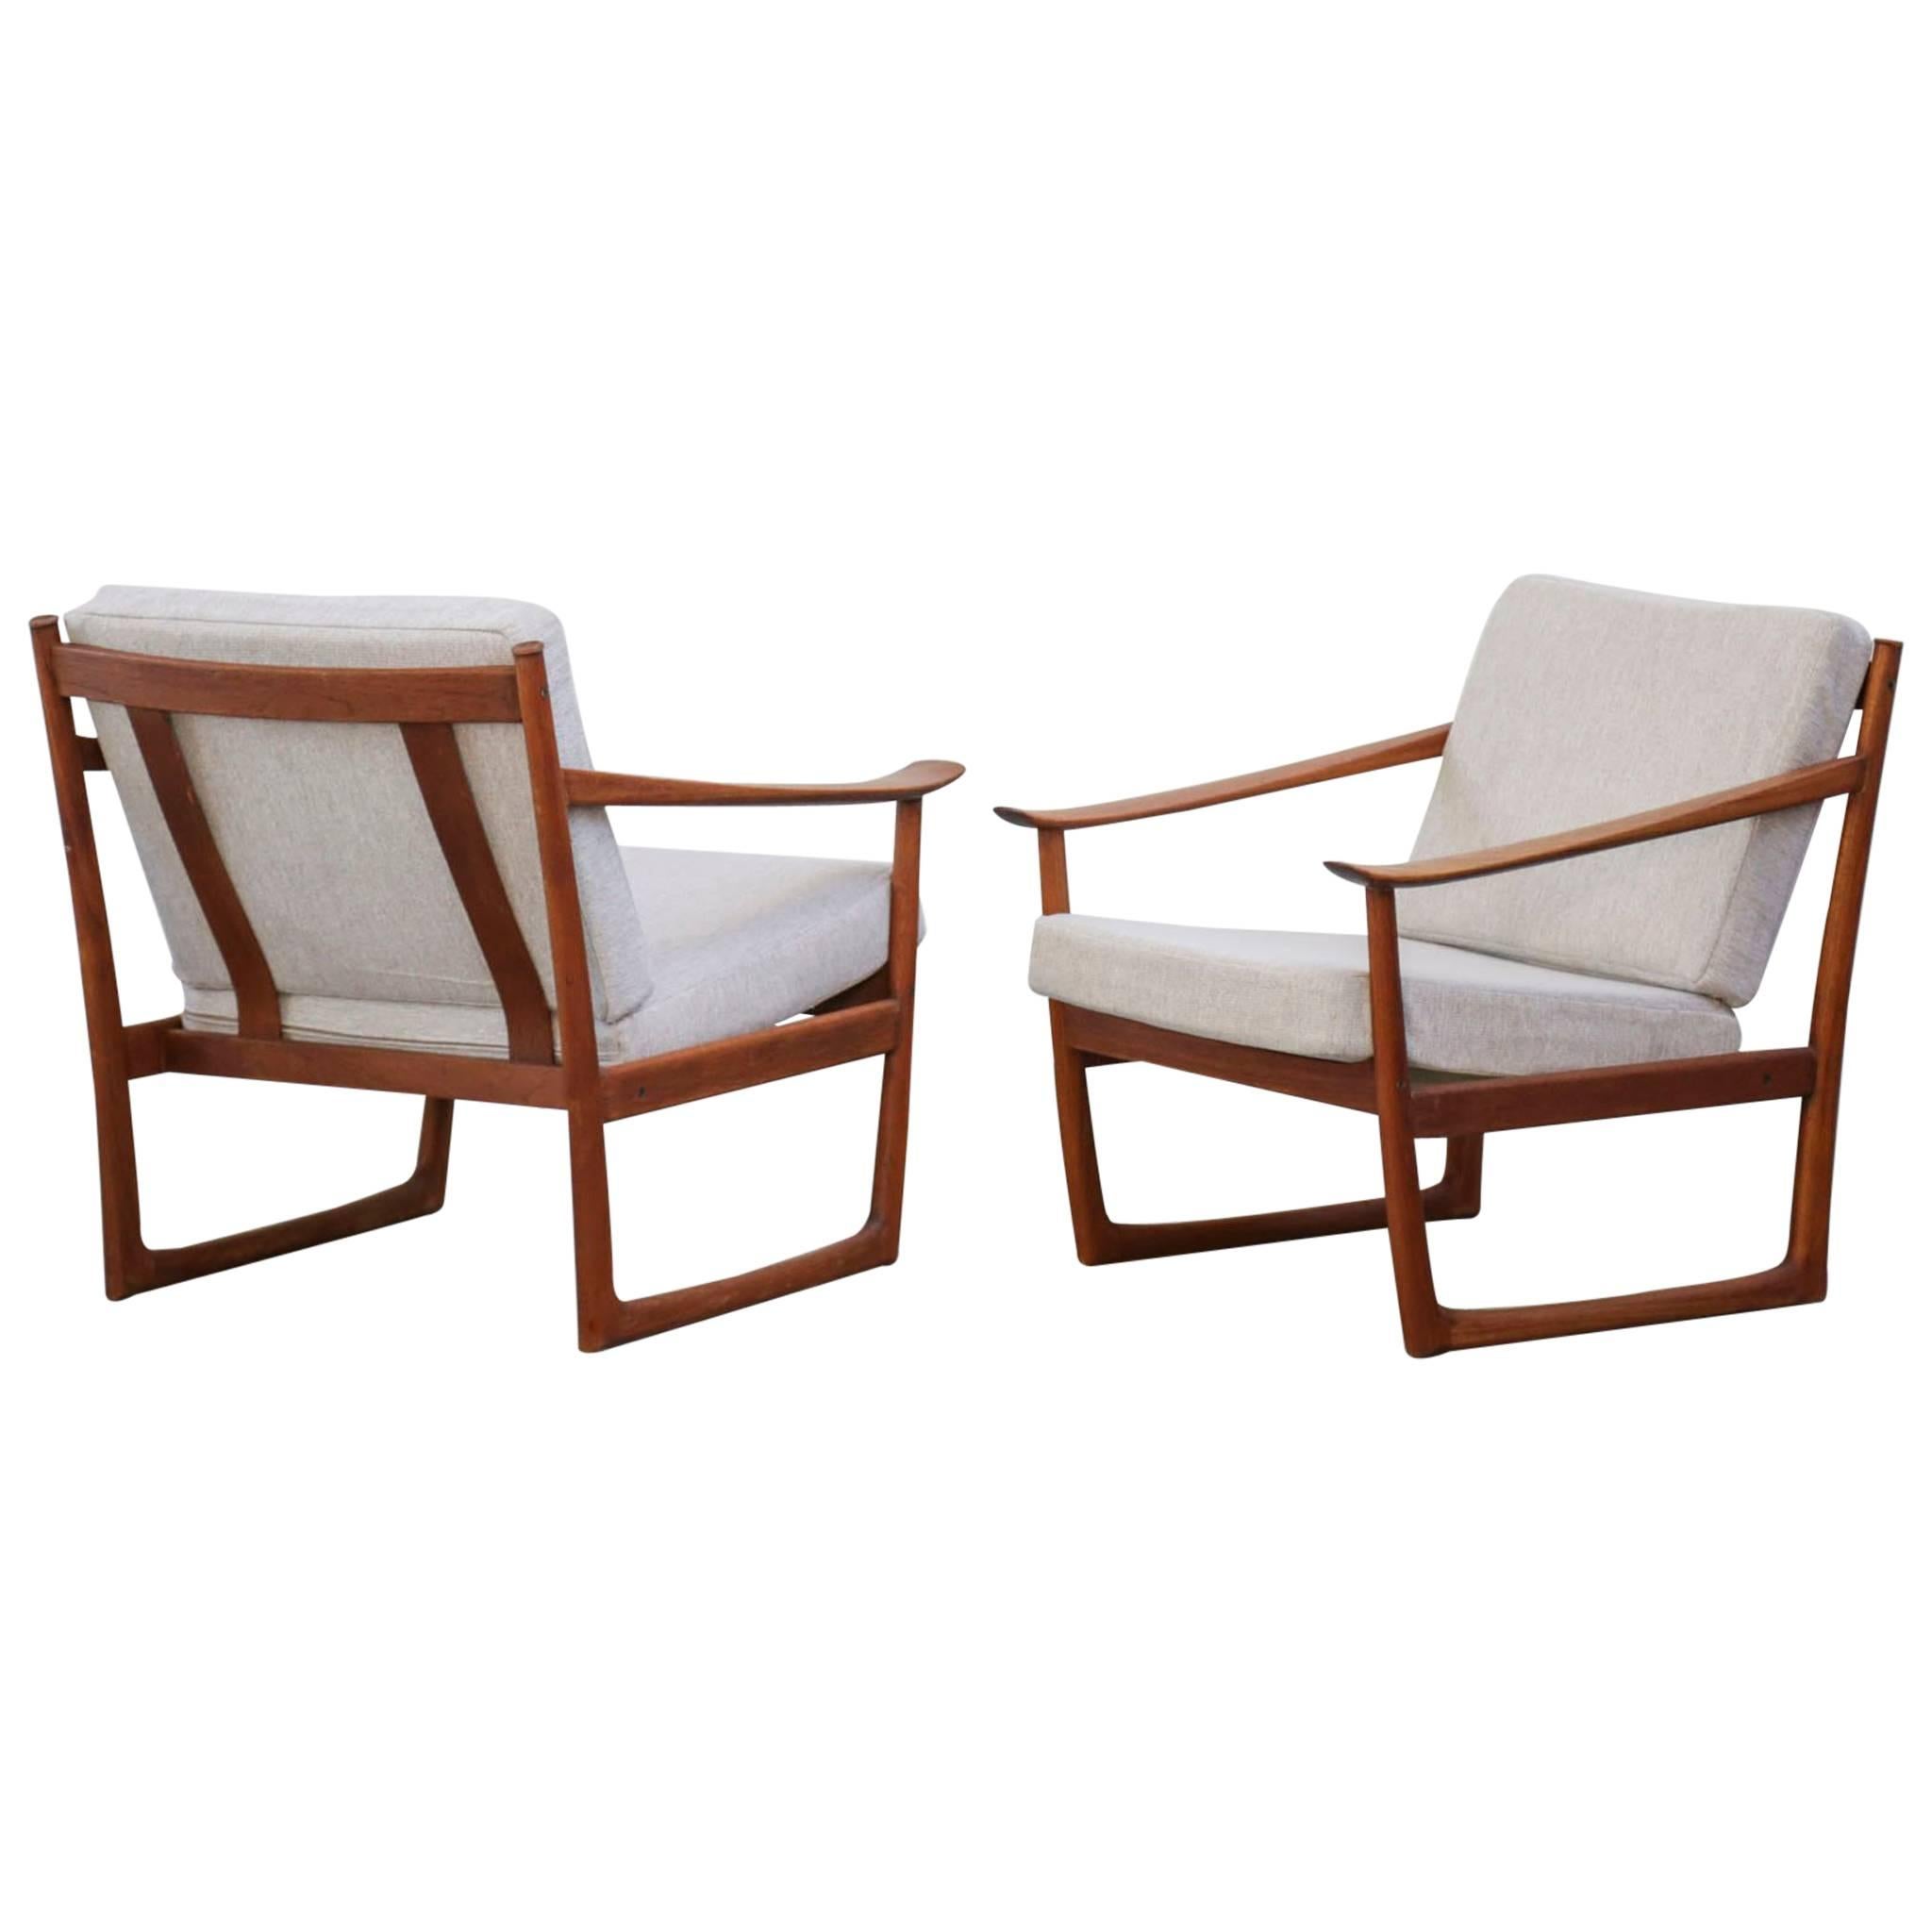 Pair of Danish Modern Lounge Chair Peter Hvidt & Orla Mølgaard FD130